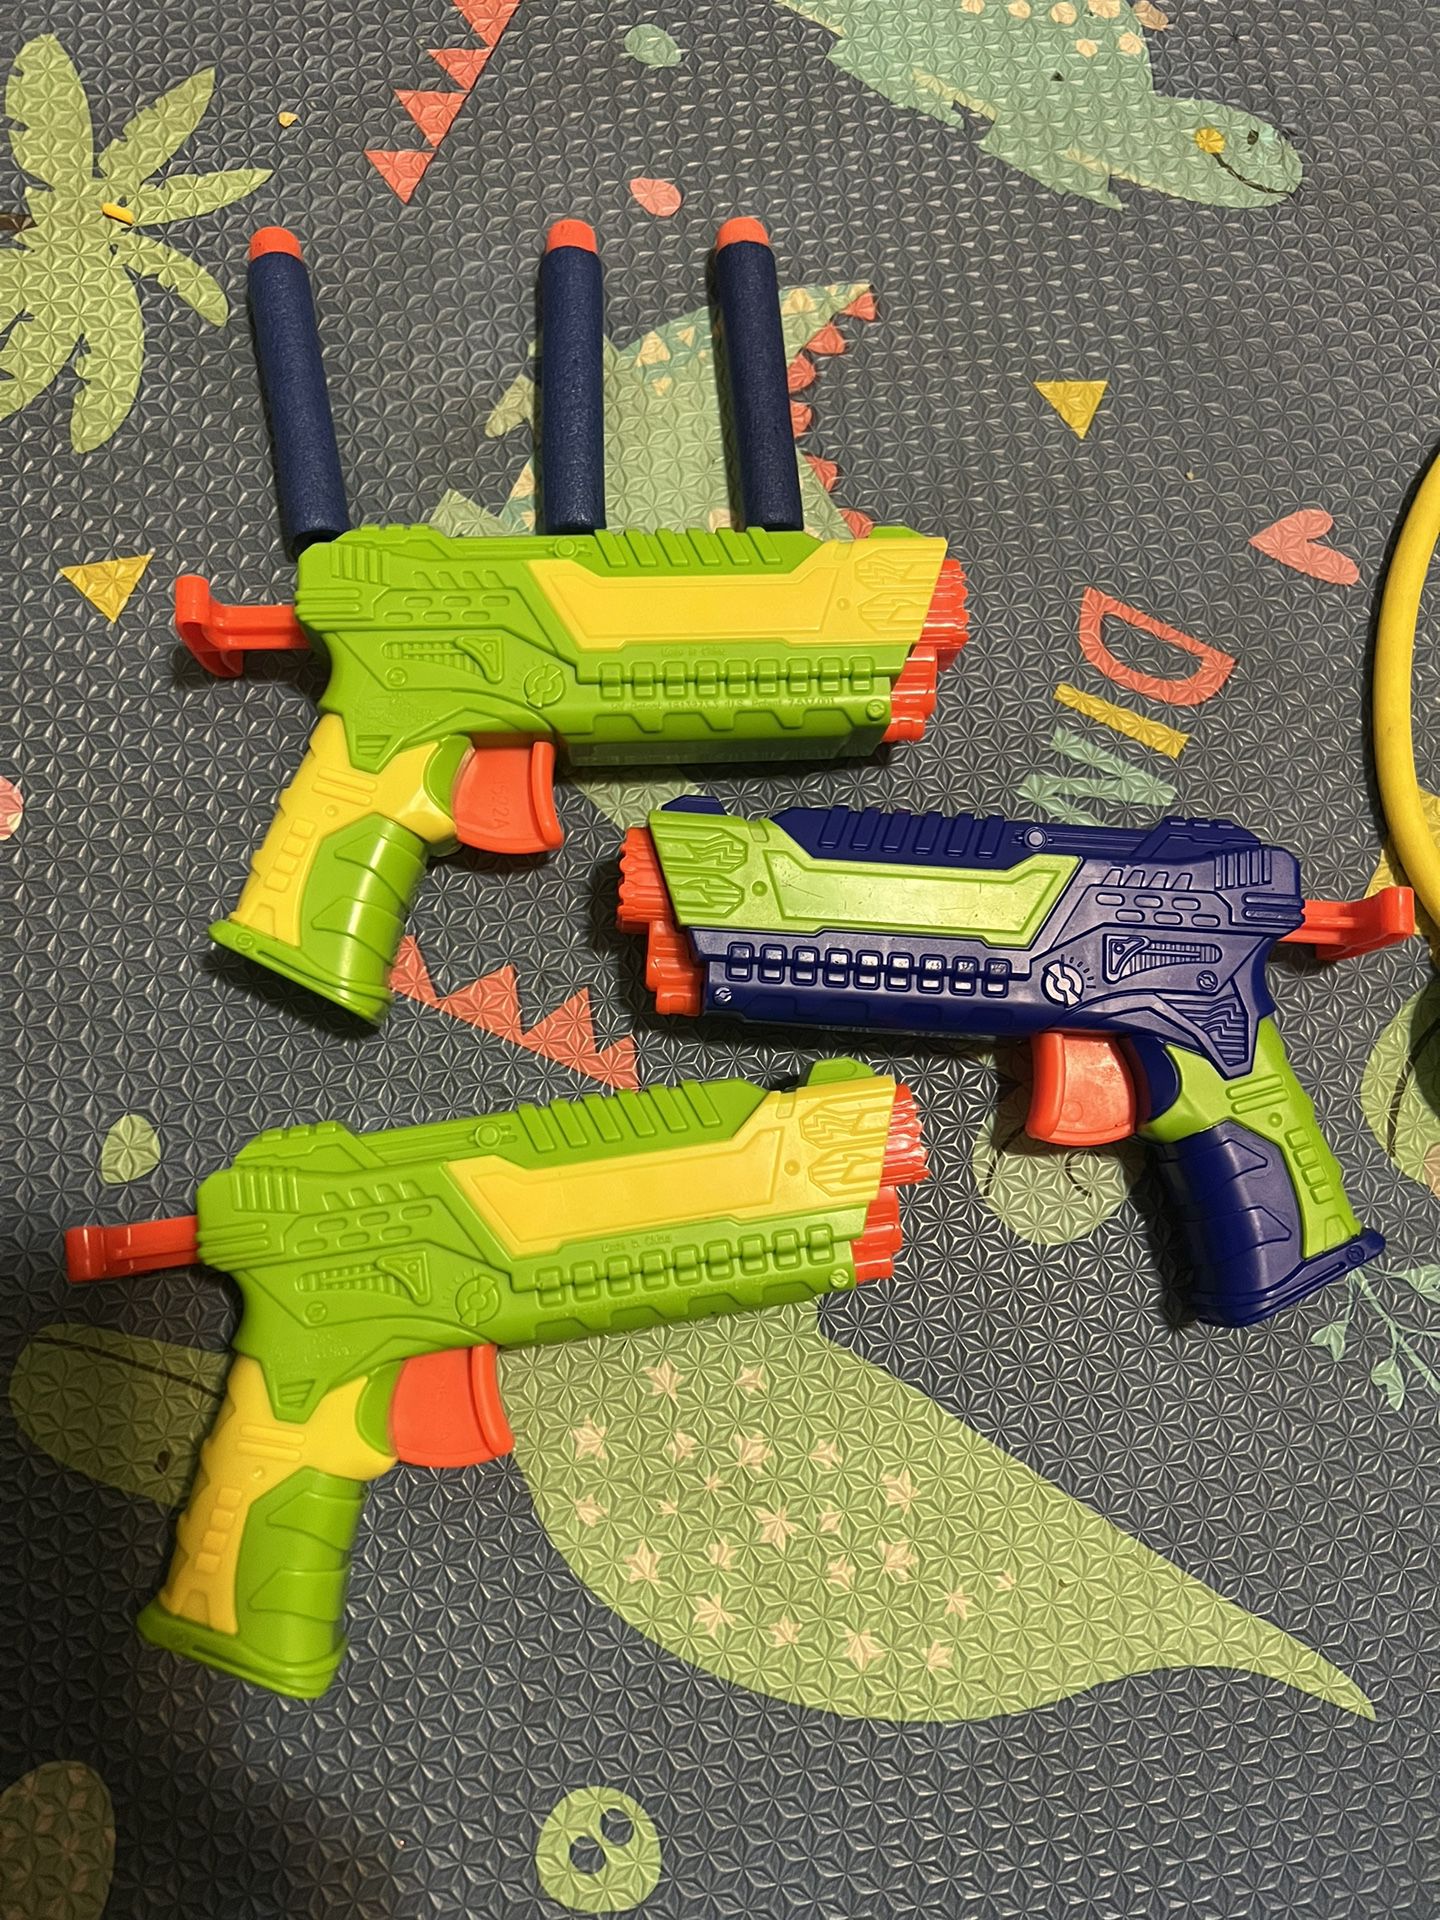 Nerf Type Guns 